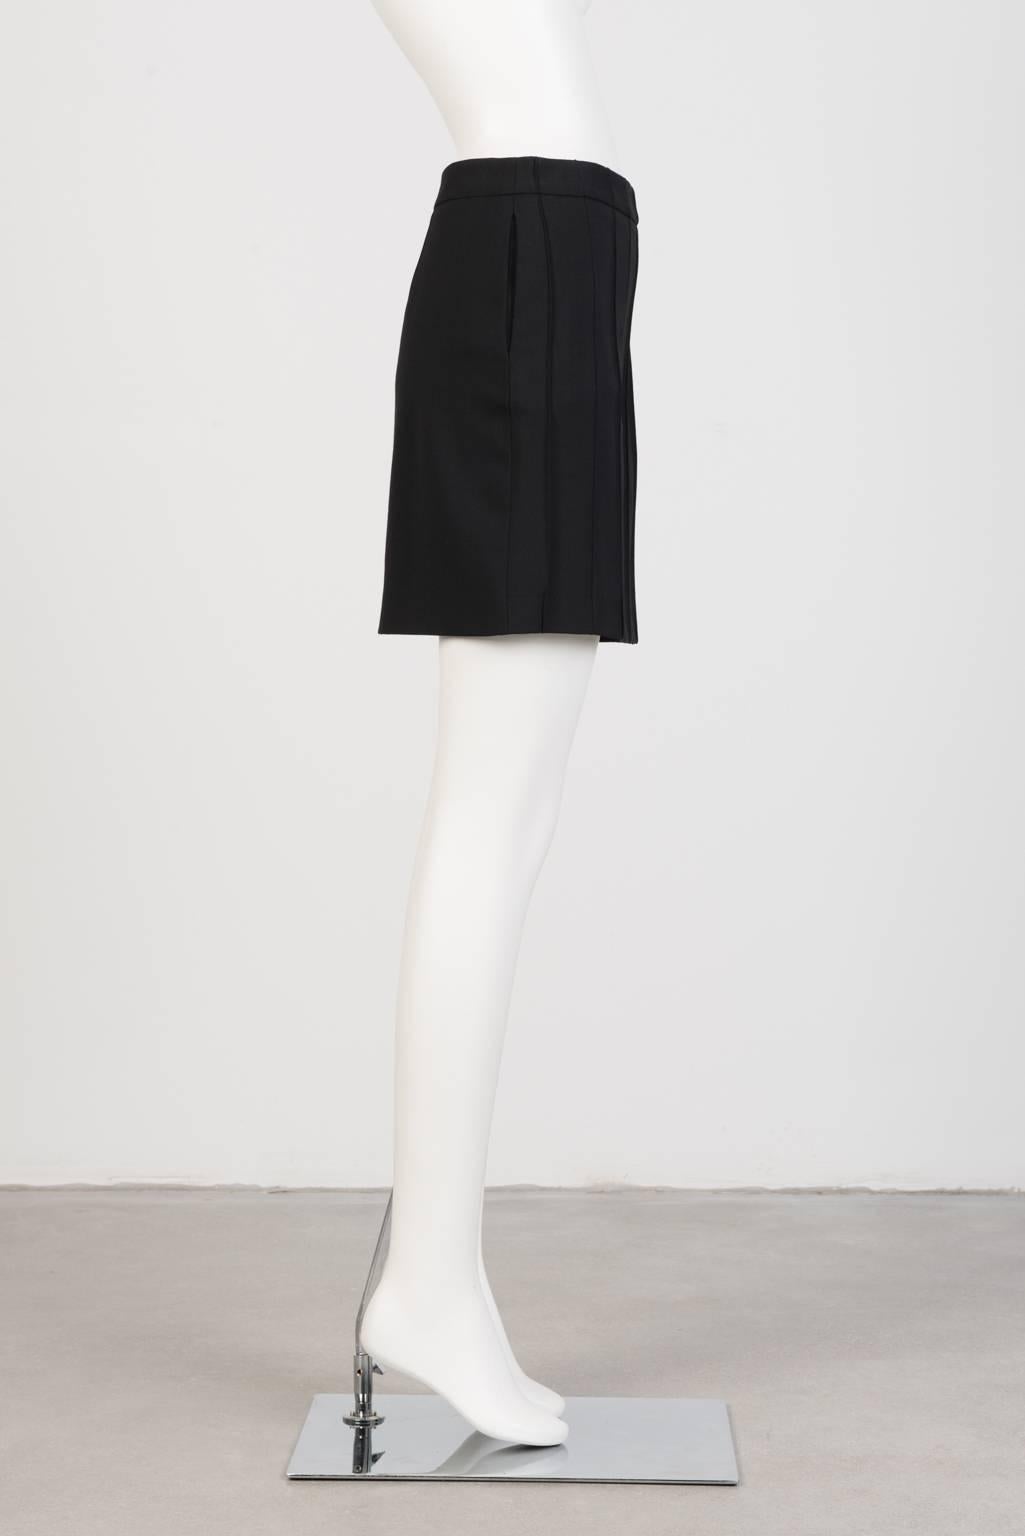 Martin Margiela Short Skirt In New Condition For Sale In Xiamen, Fujian